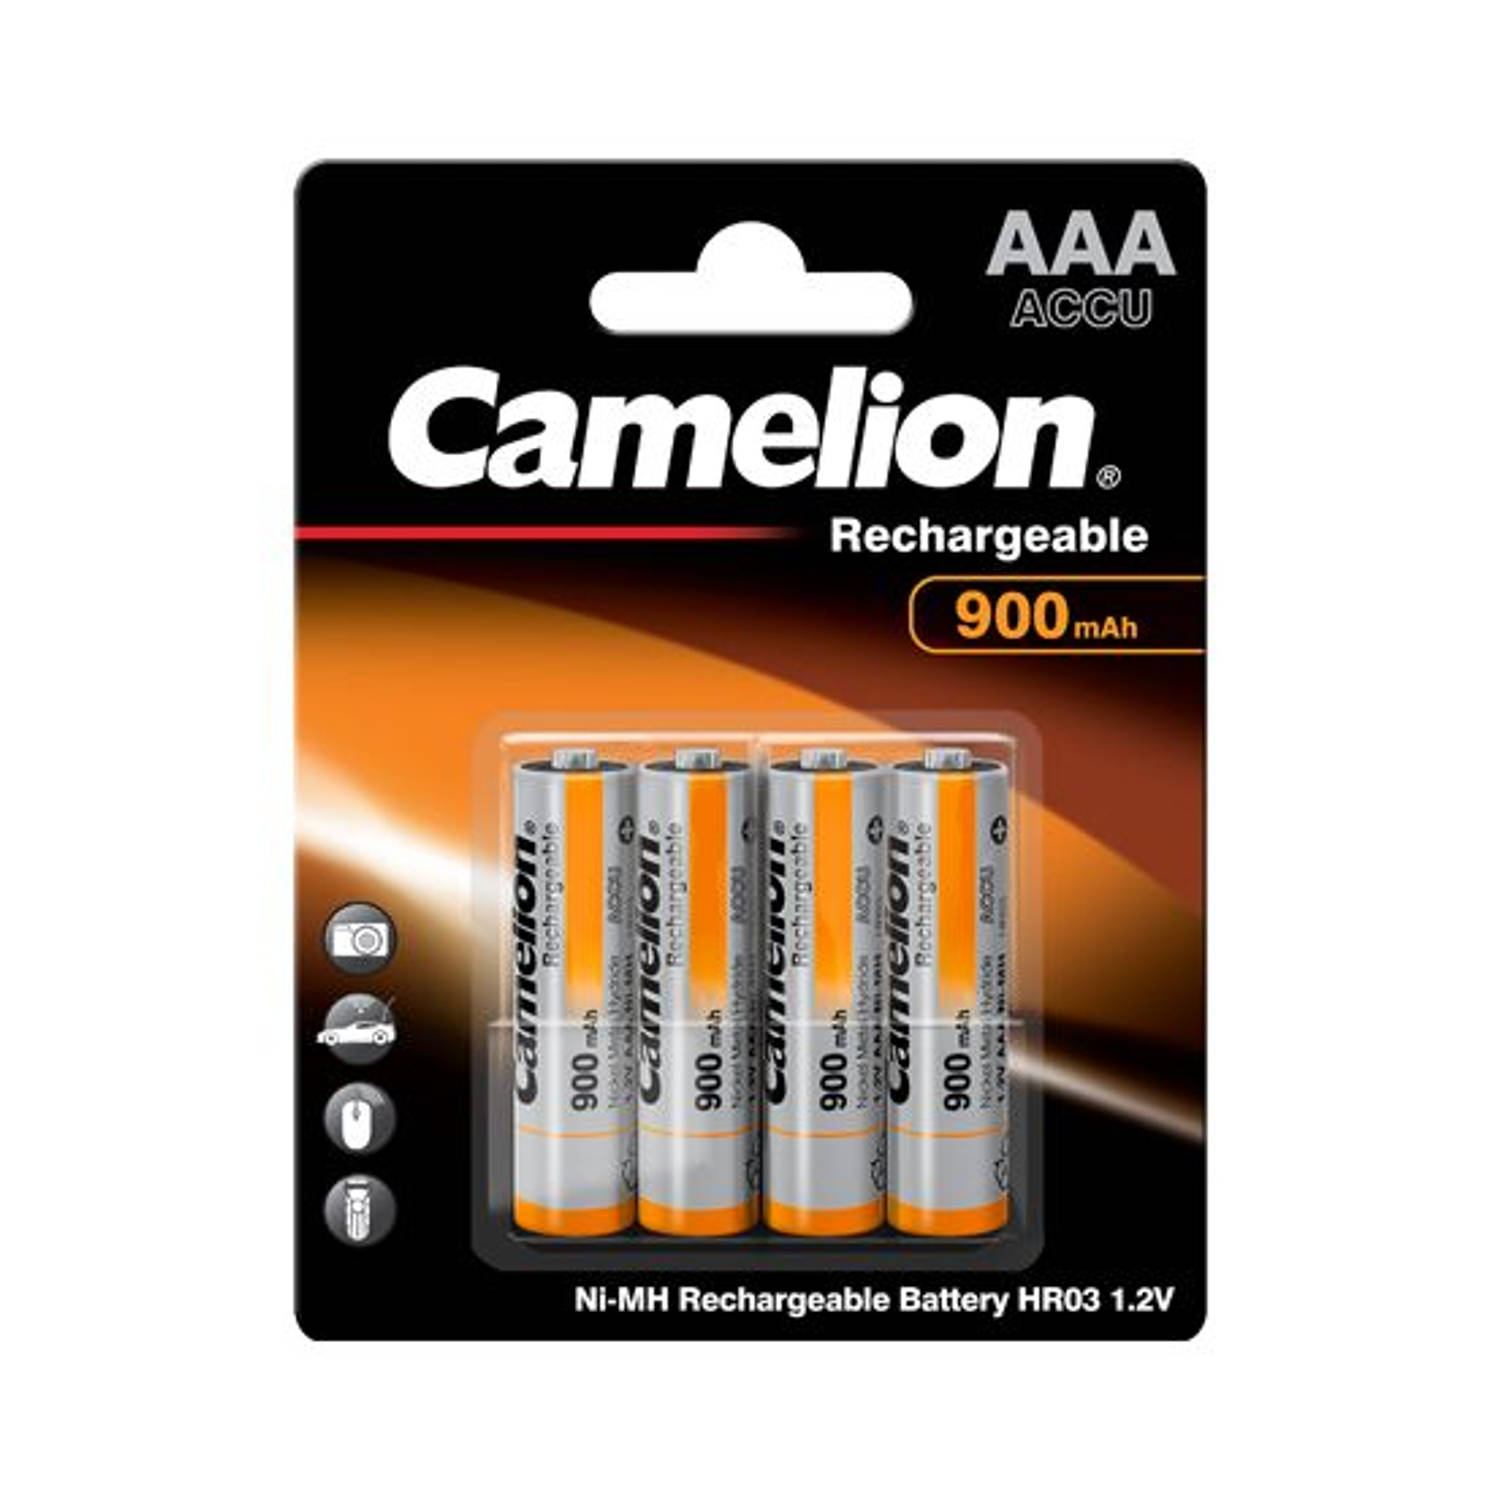 Rechargeable batteries Camelion AAA Micro 900mAH (4 Pcs) Camelion